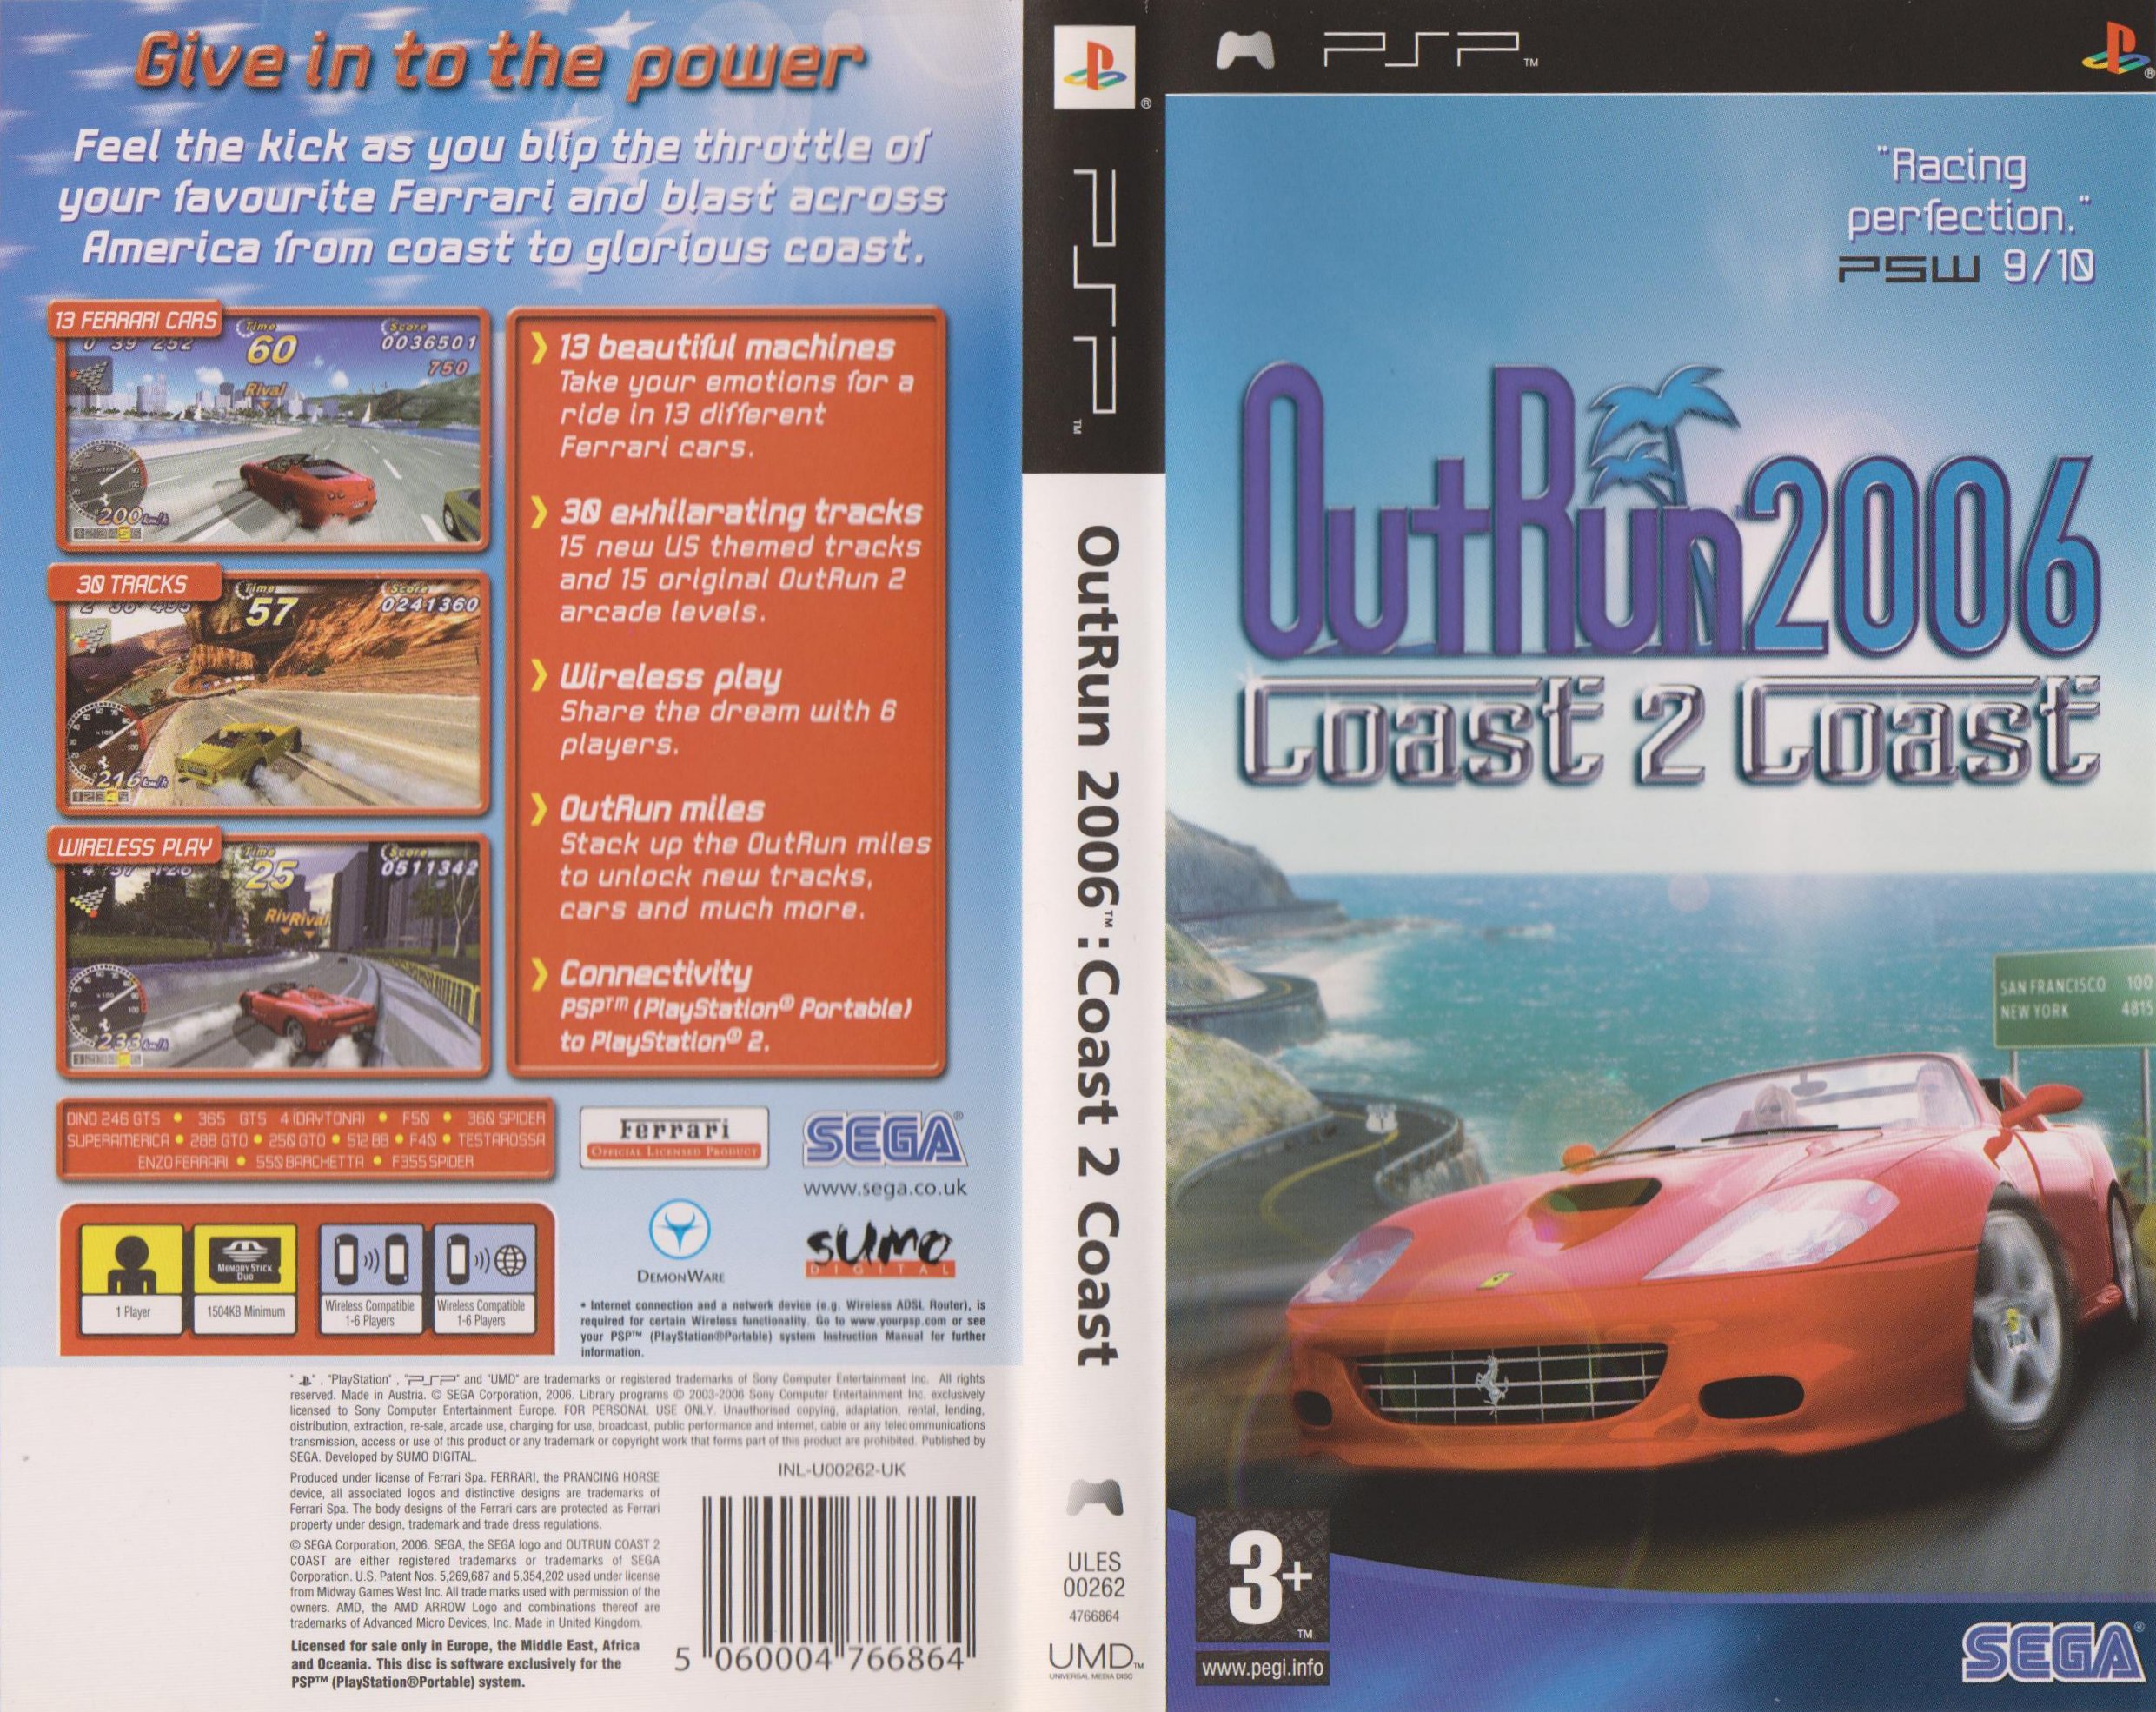 Outrun coast. Outrun 2006 Coast 2 Coast. Outrun 2006. Outrun PSP. Outrun PLAYSTATION Portable.